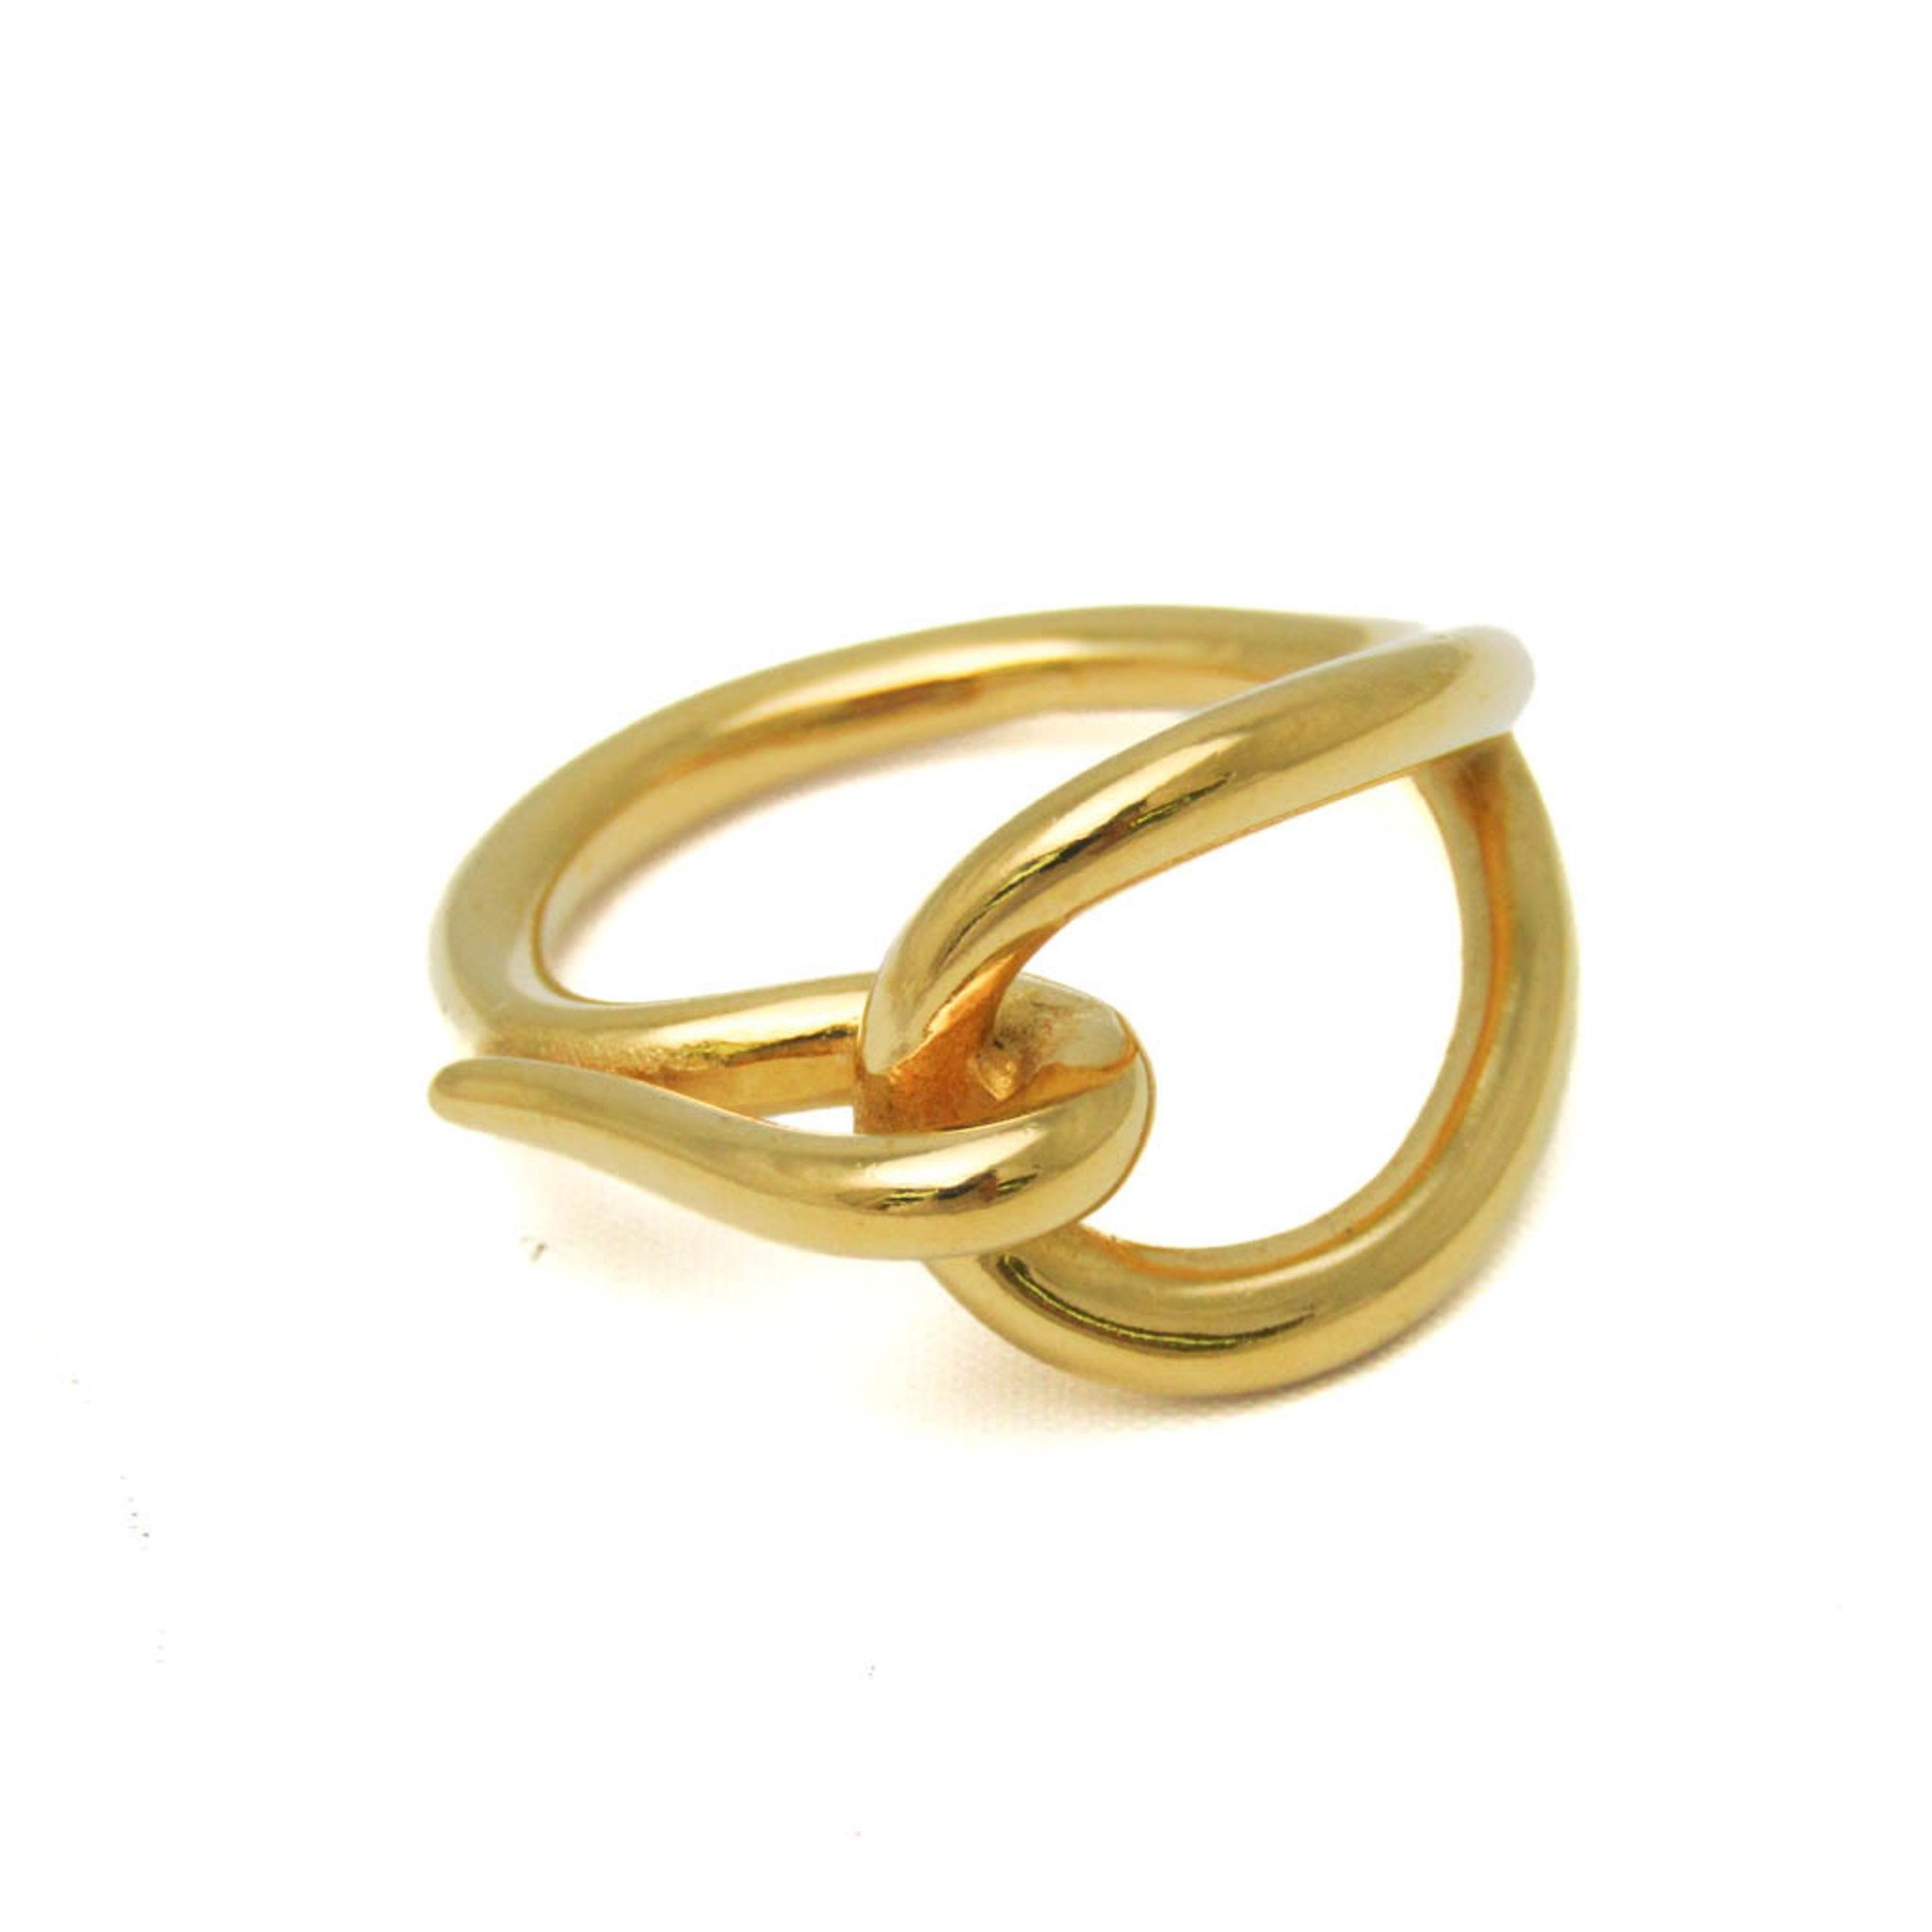 Hermes Metal Scarf Ring Gold jumbo